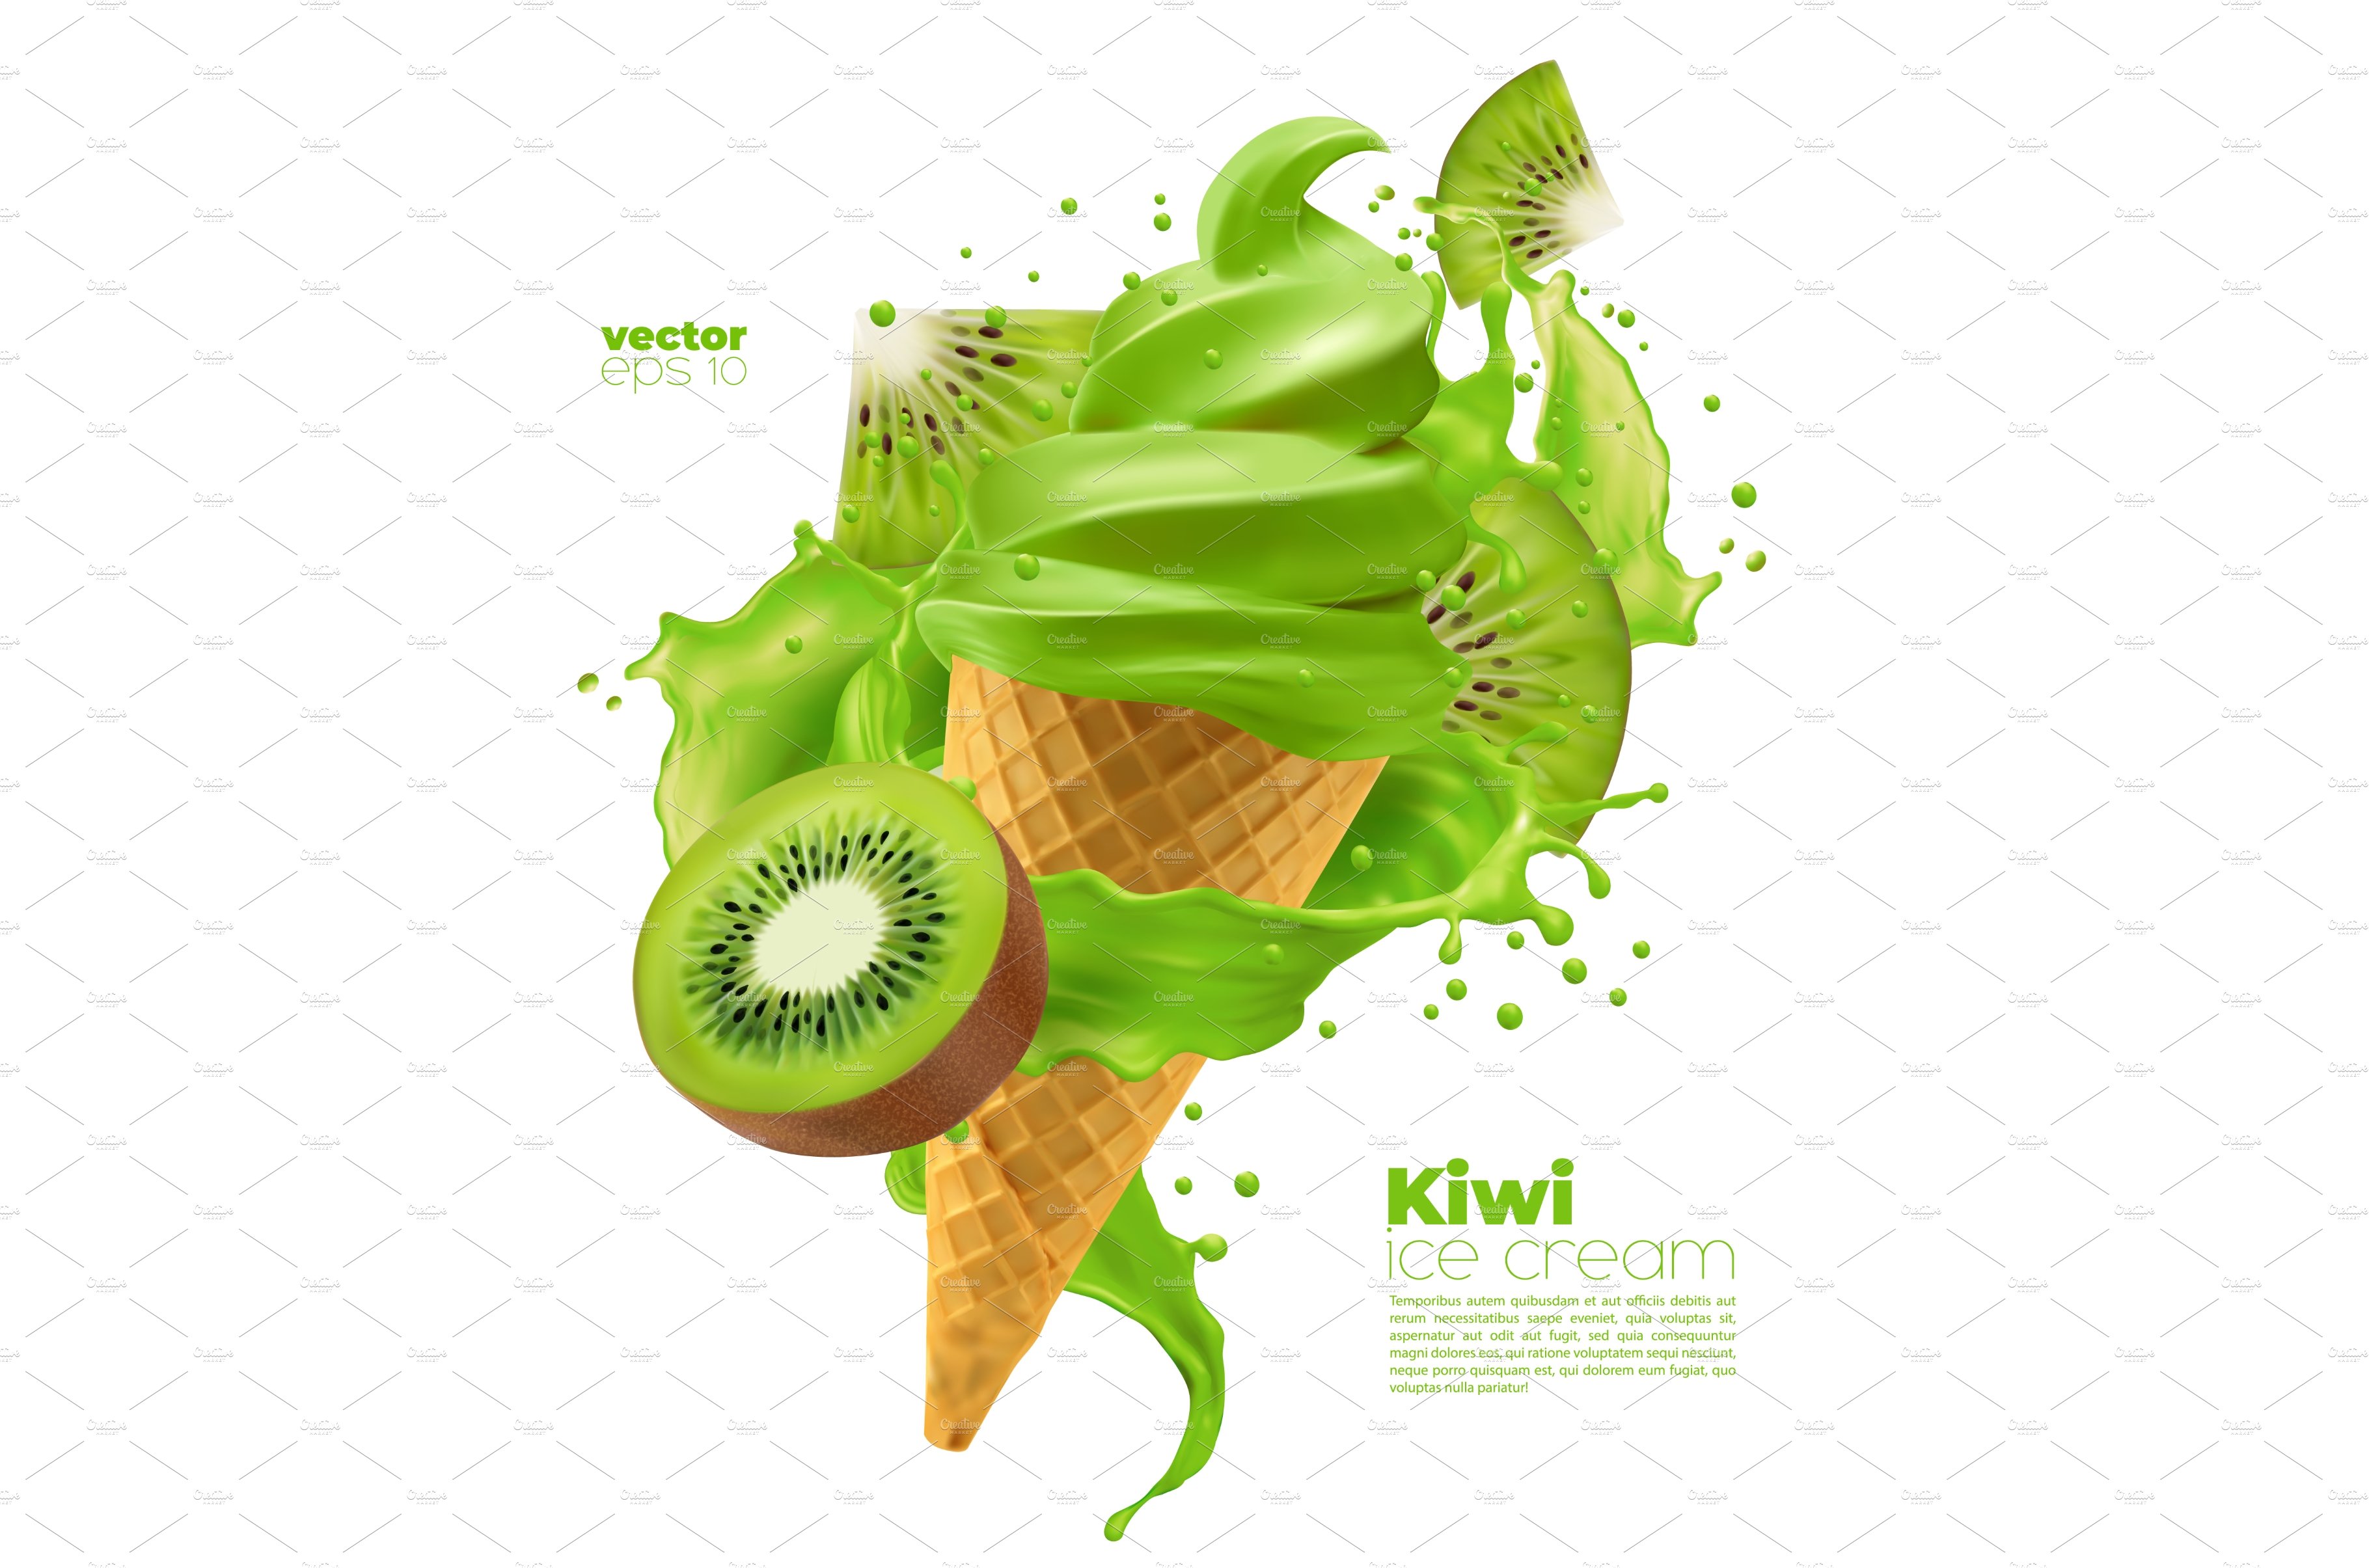 Isolated kiwi soft ice cream cone cover image.